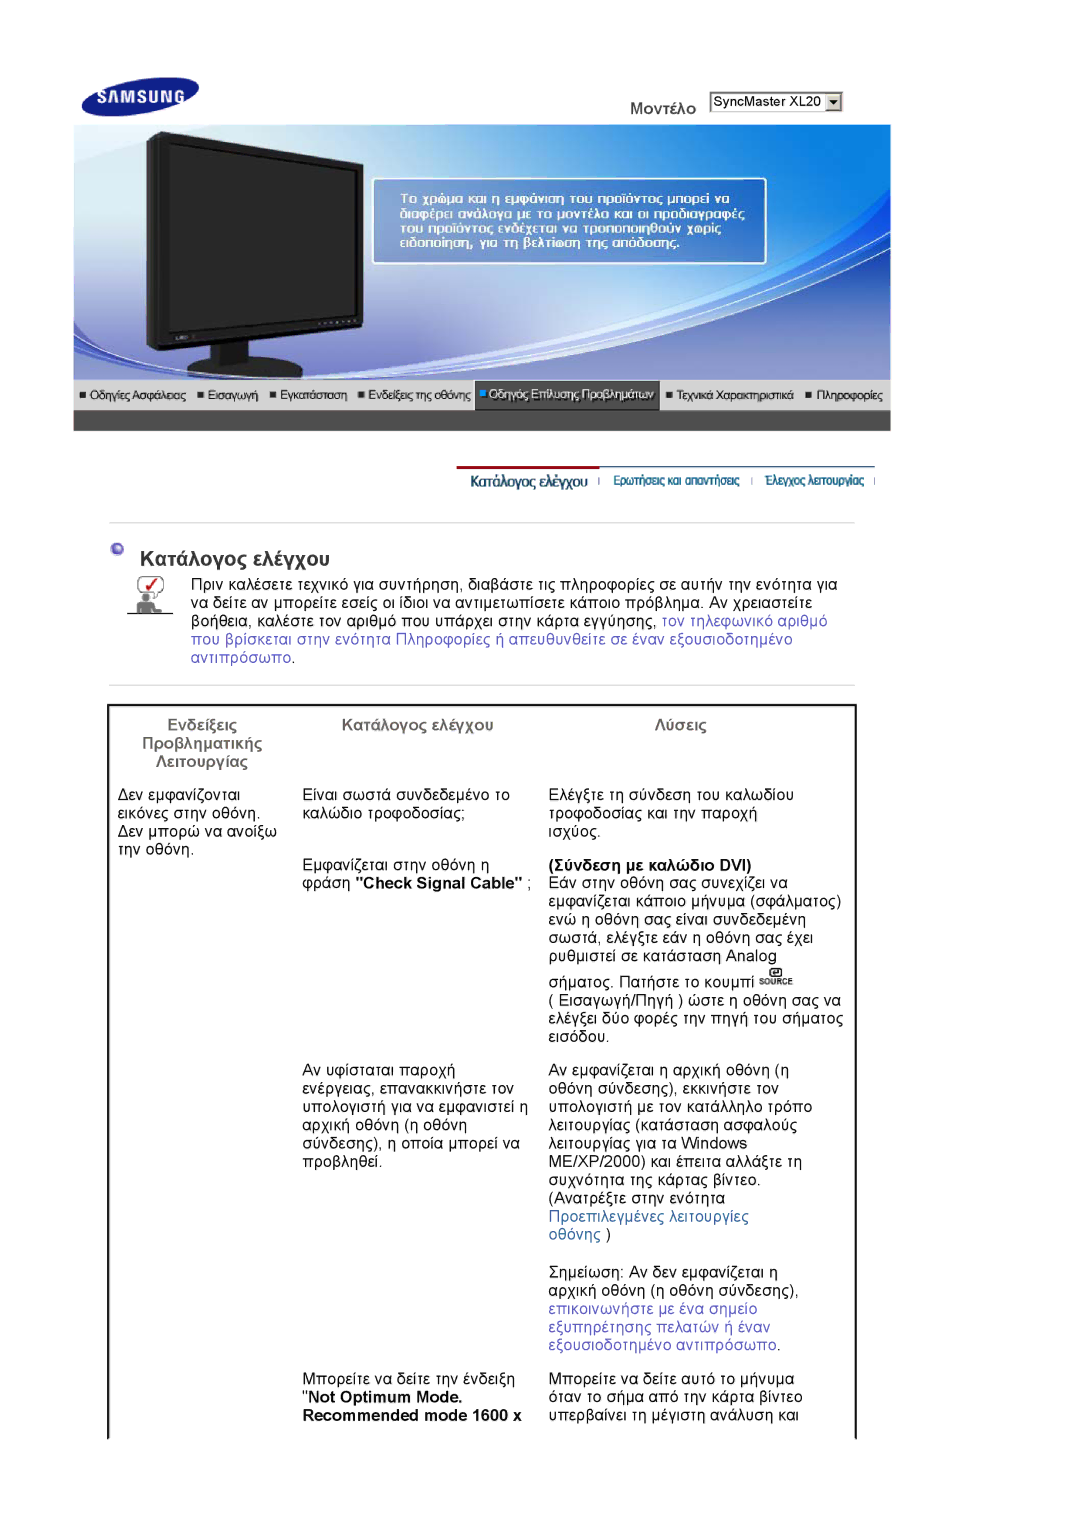 Samsung LS20EDBEB/EDC Kατάλογος ελέγχου, Recommended mode 1600, Σύνδεση µε καλώδιο DVI Εάν στην οθόνη σας συνεχίζει να 